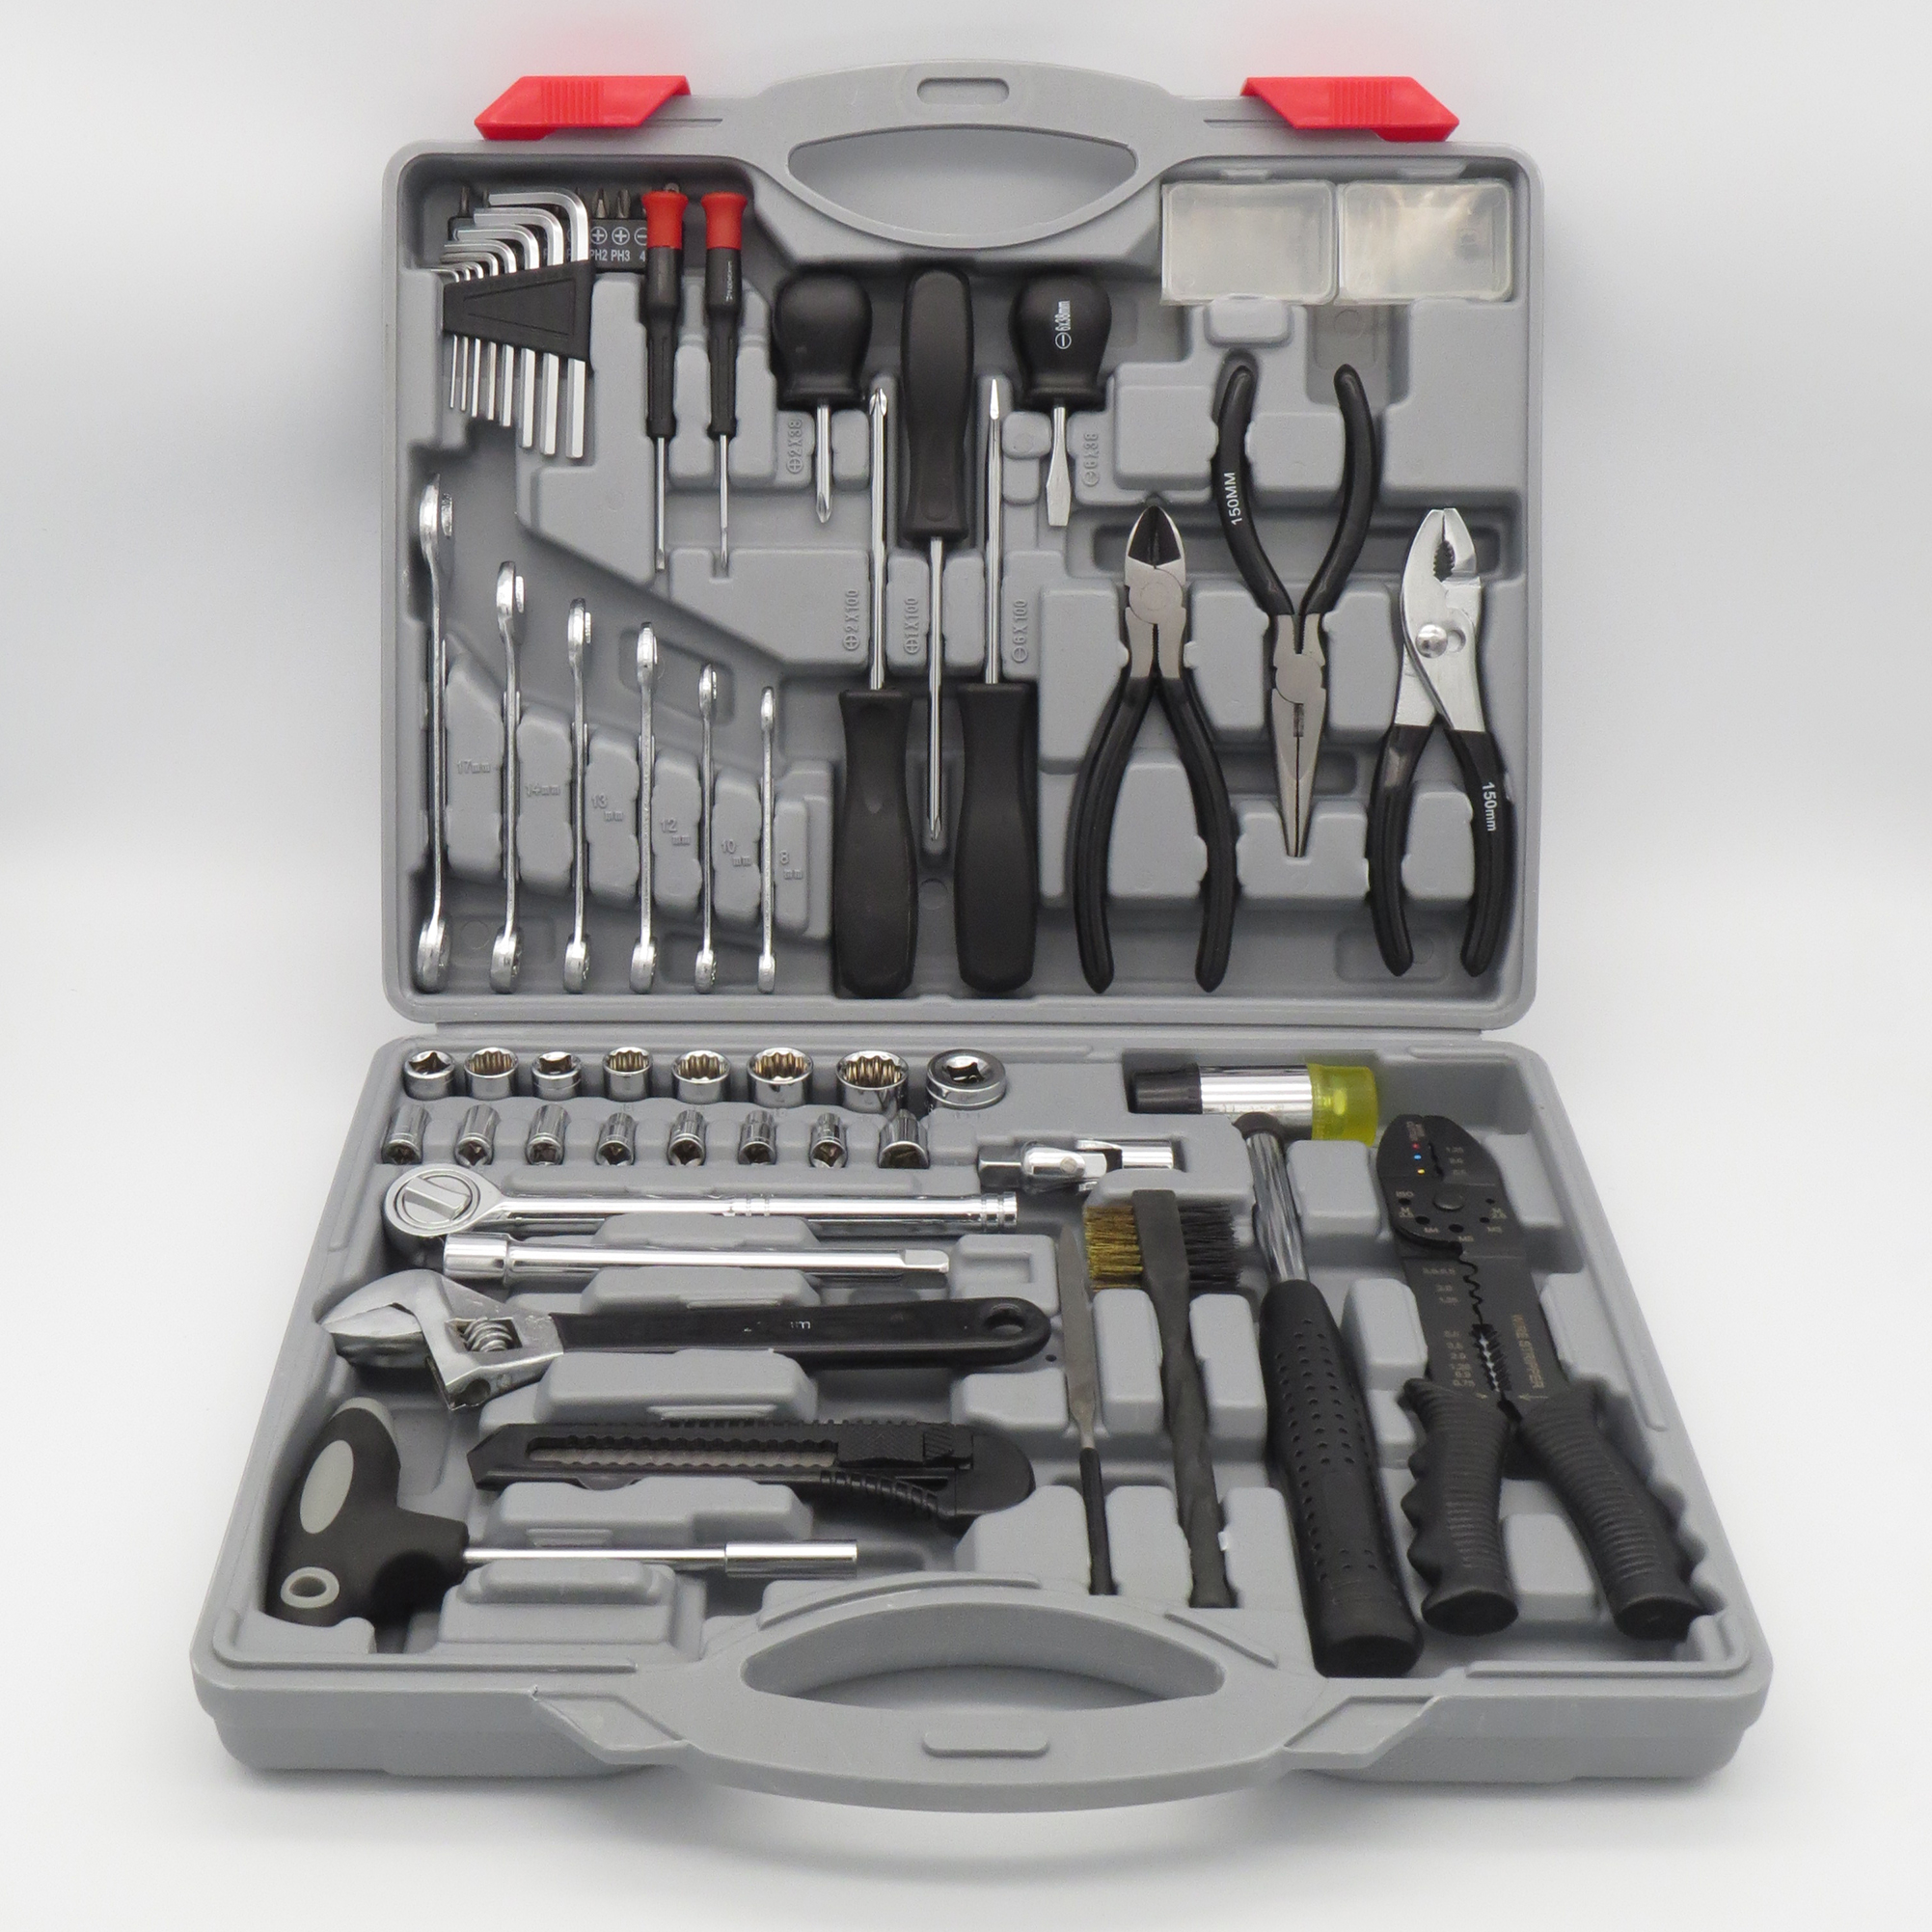 Hand tool kit